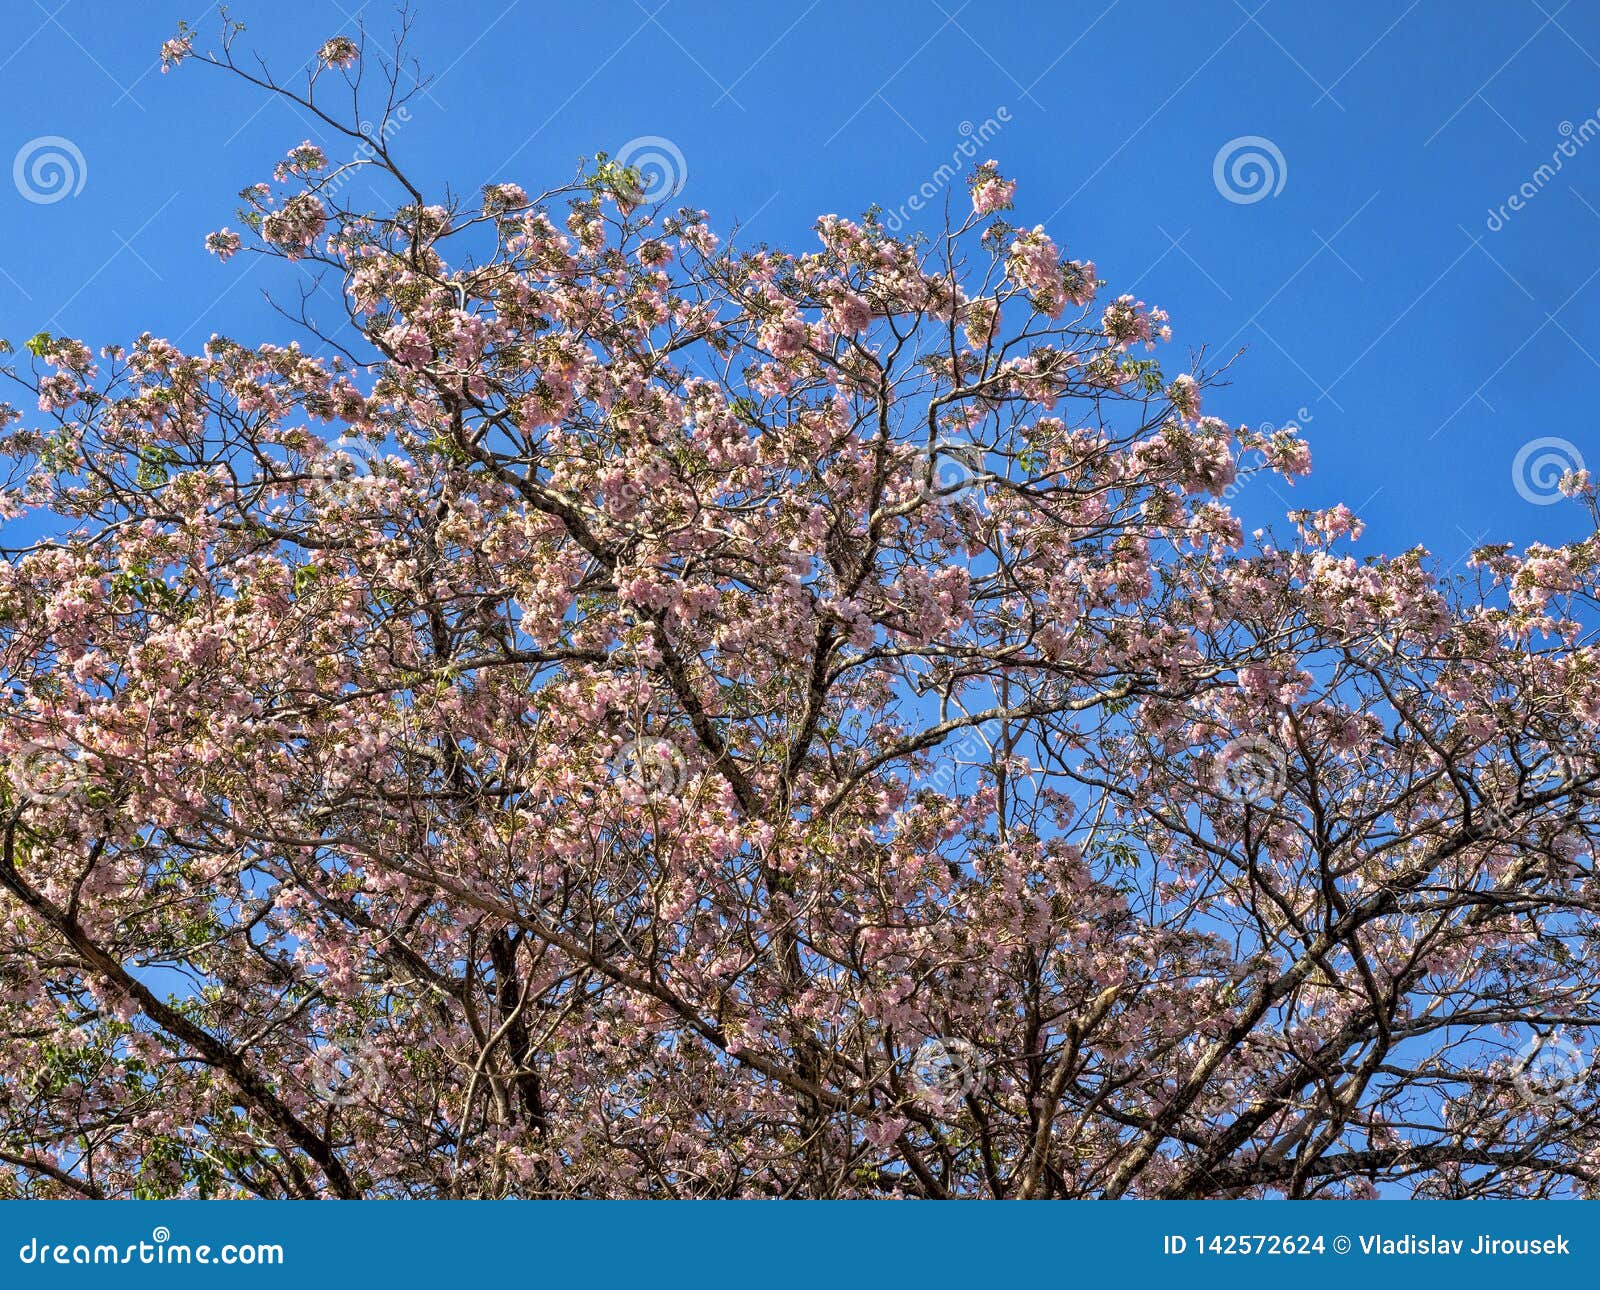 roble de sabana, tabebuia rosea, is a beautifully flowering tree of central asmerica, honduras